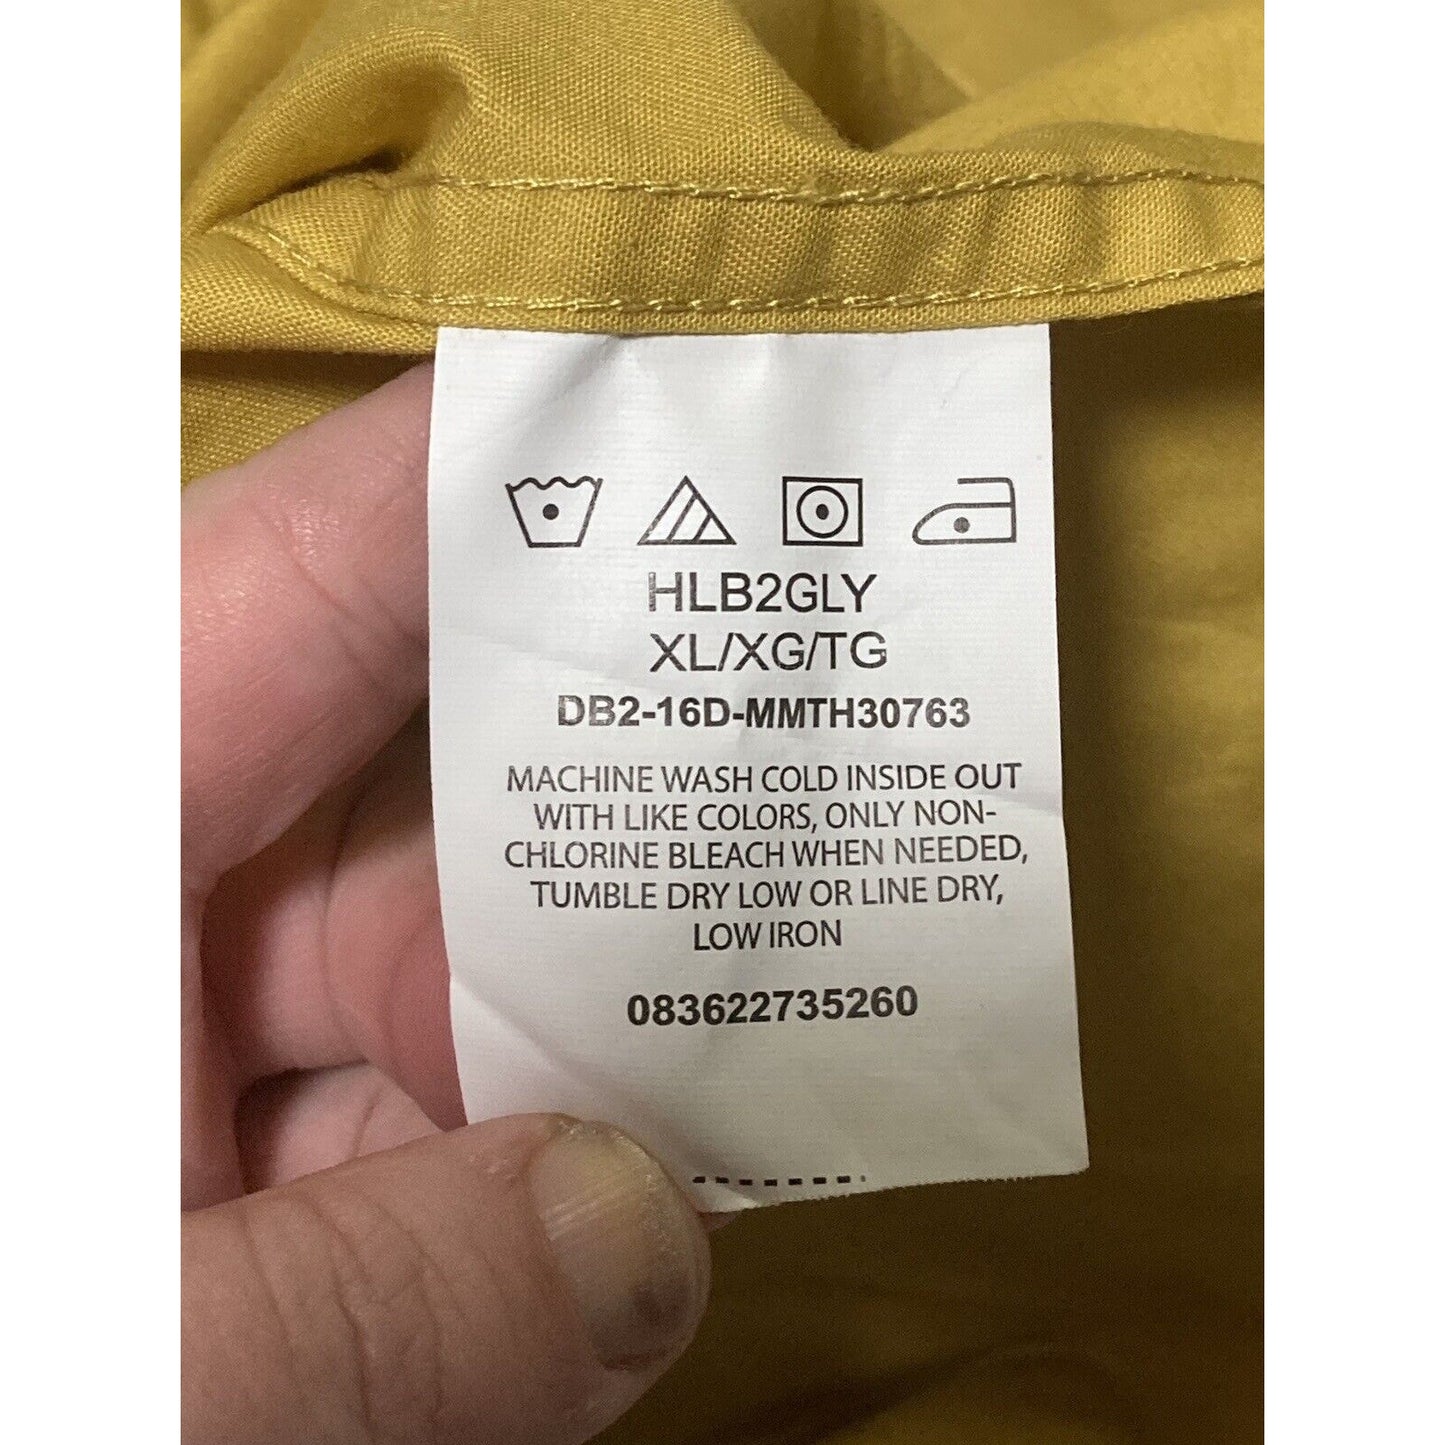 Wrangler Authentic Long Sleeve Button Down Shirt XL Mustard Yellow 100% Cotton